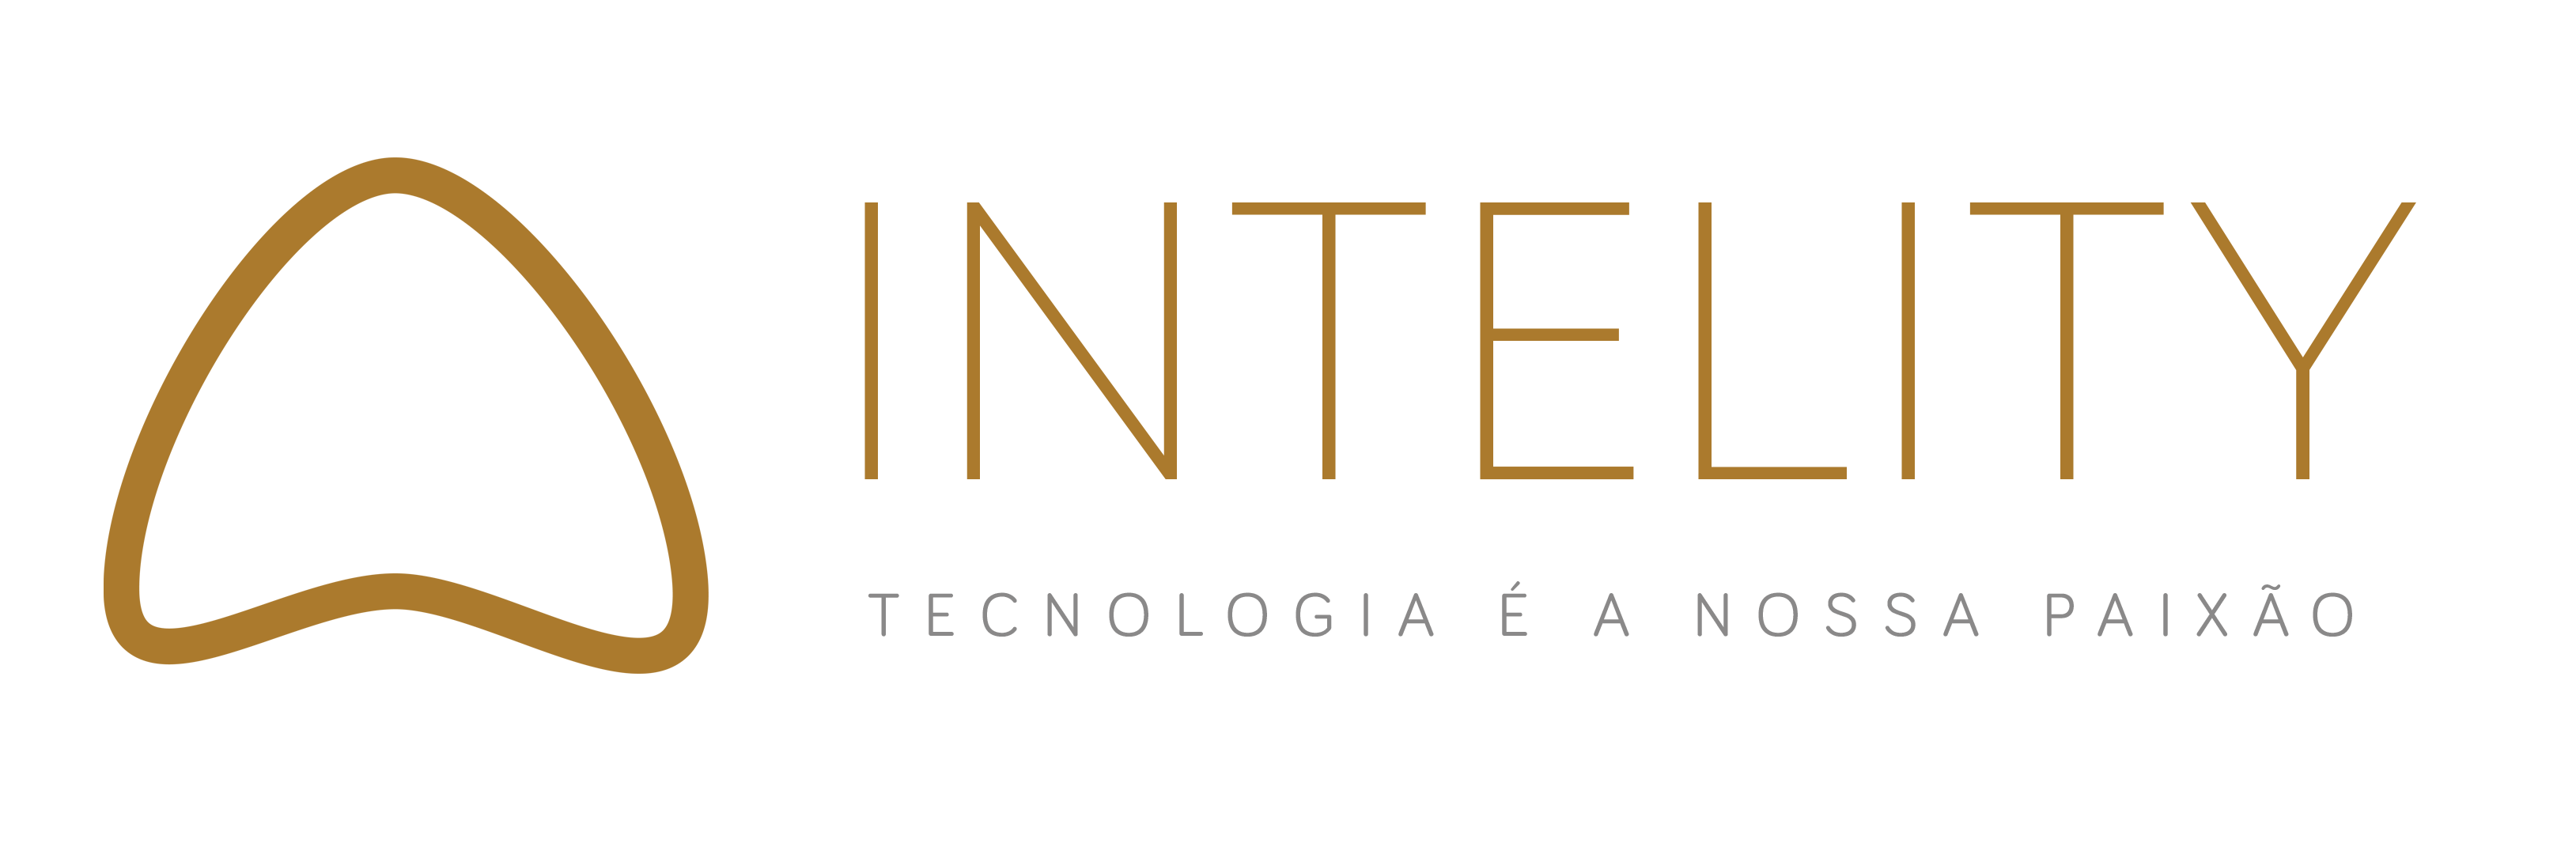 Logotipo Intelity